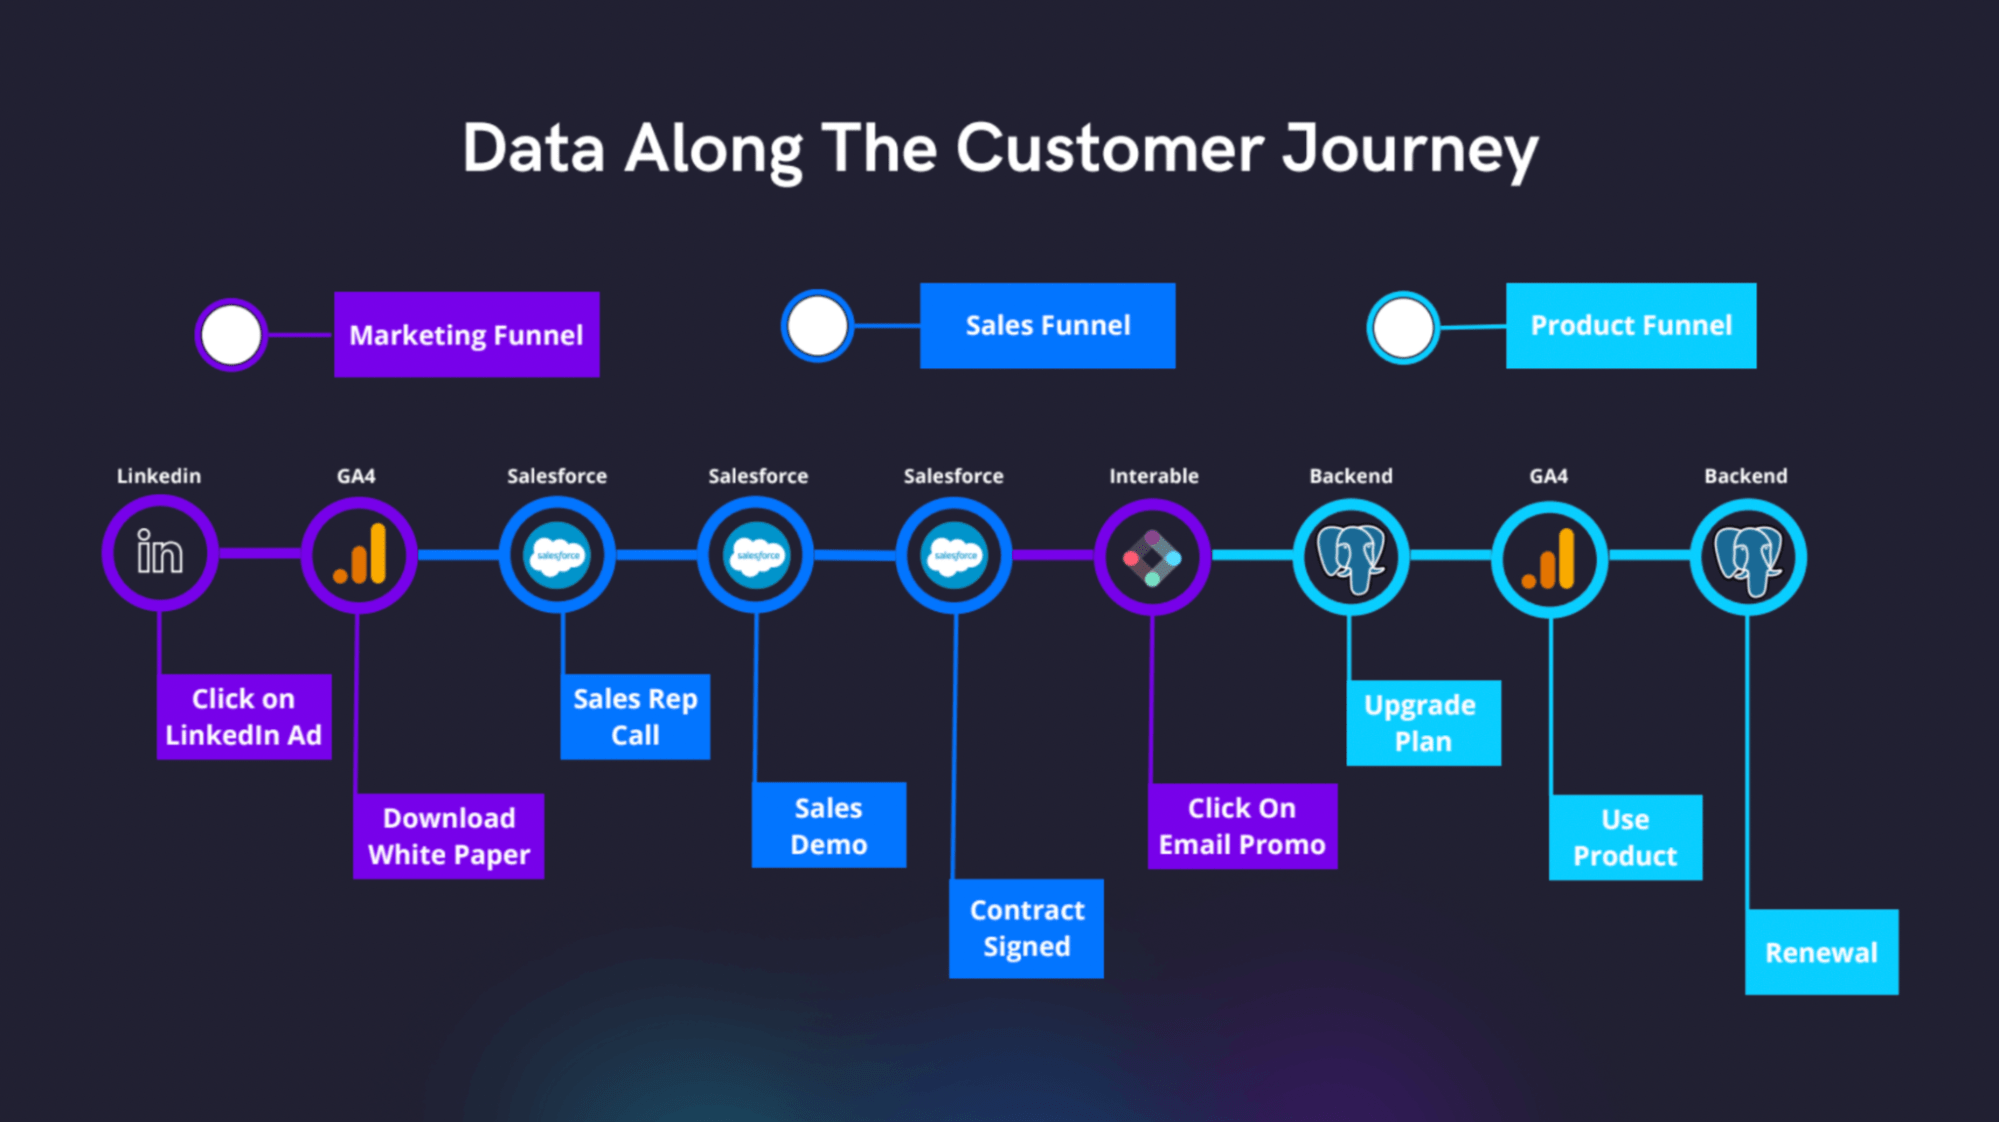 Data points along the customer journey